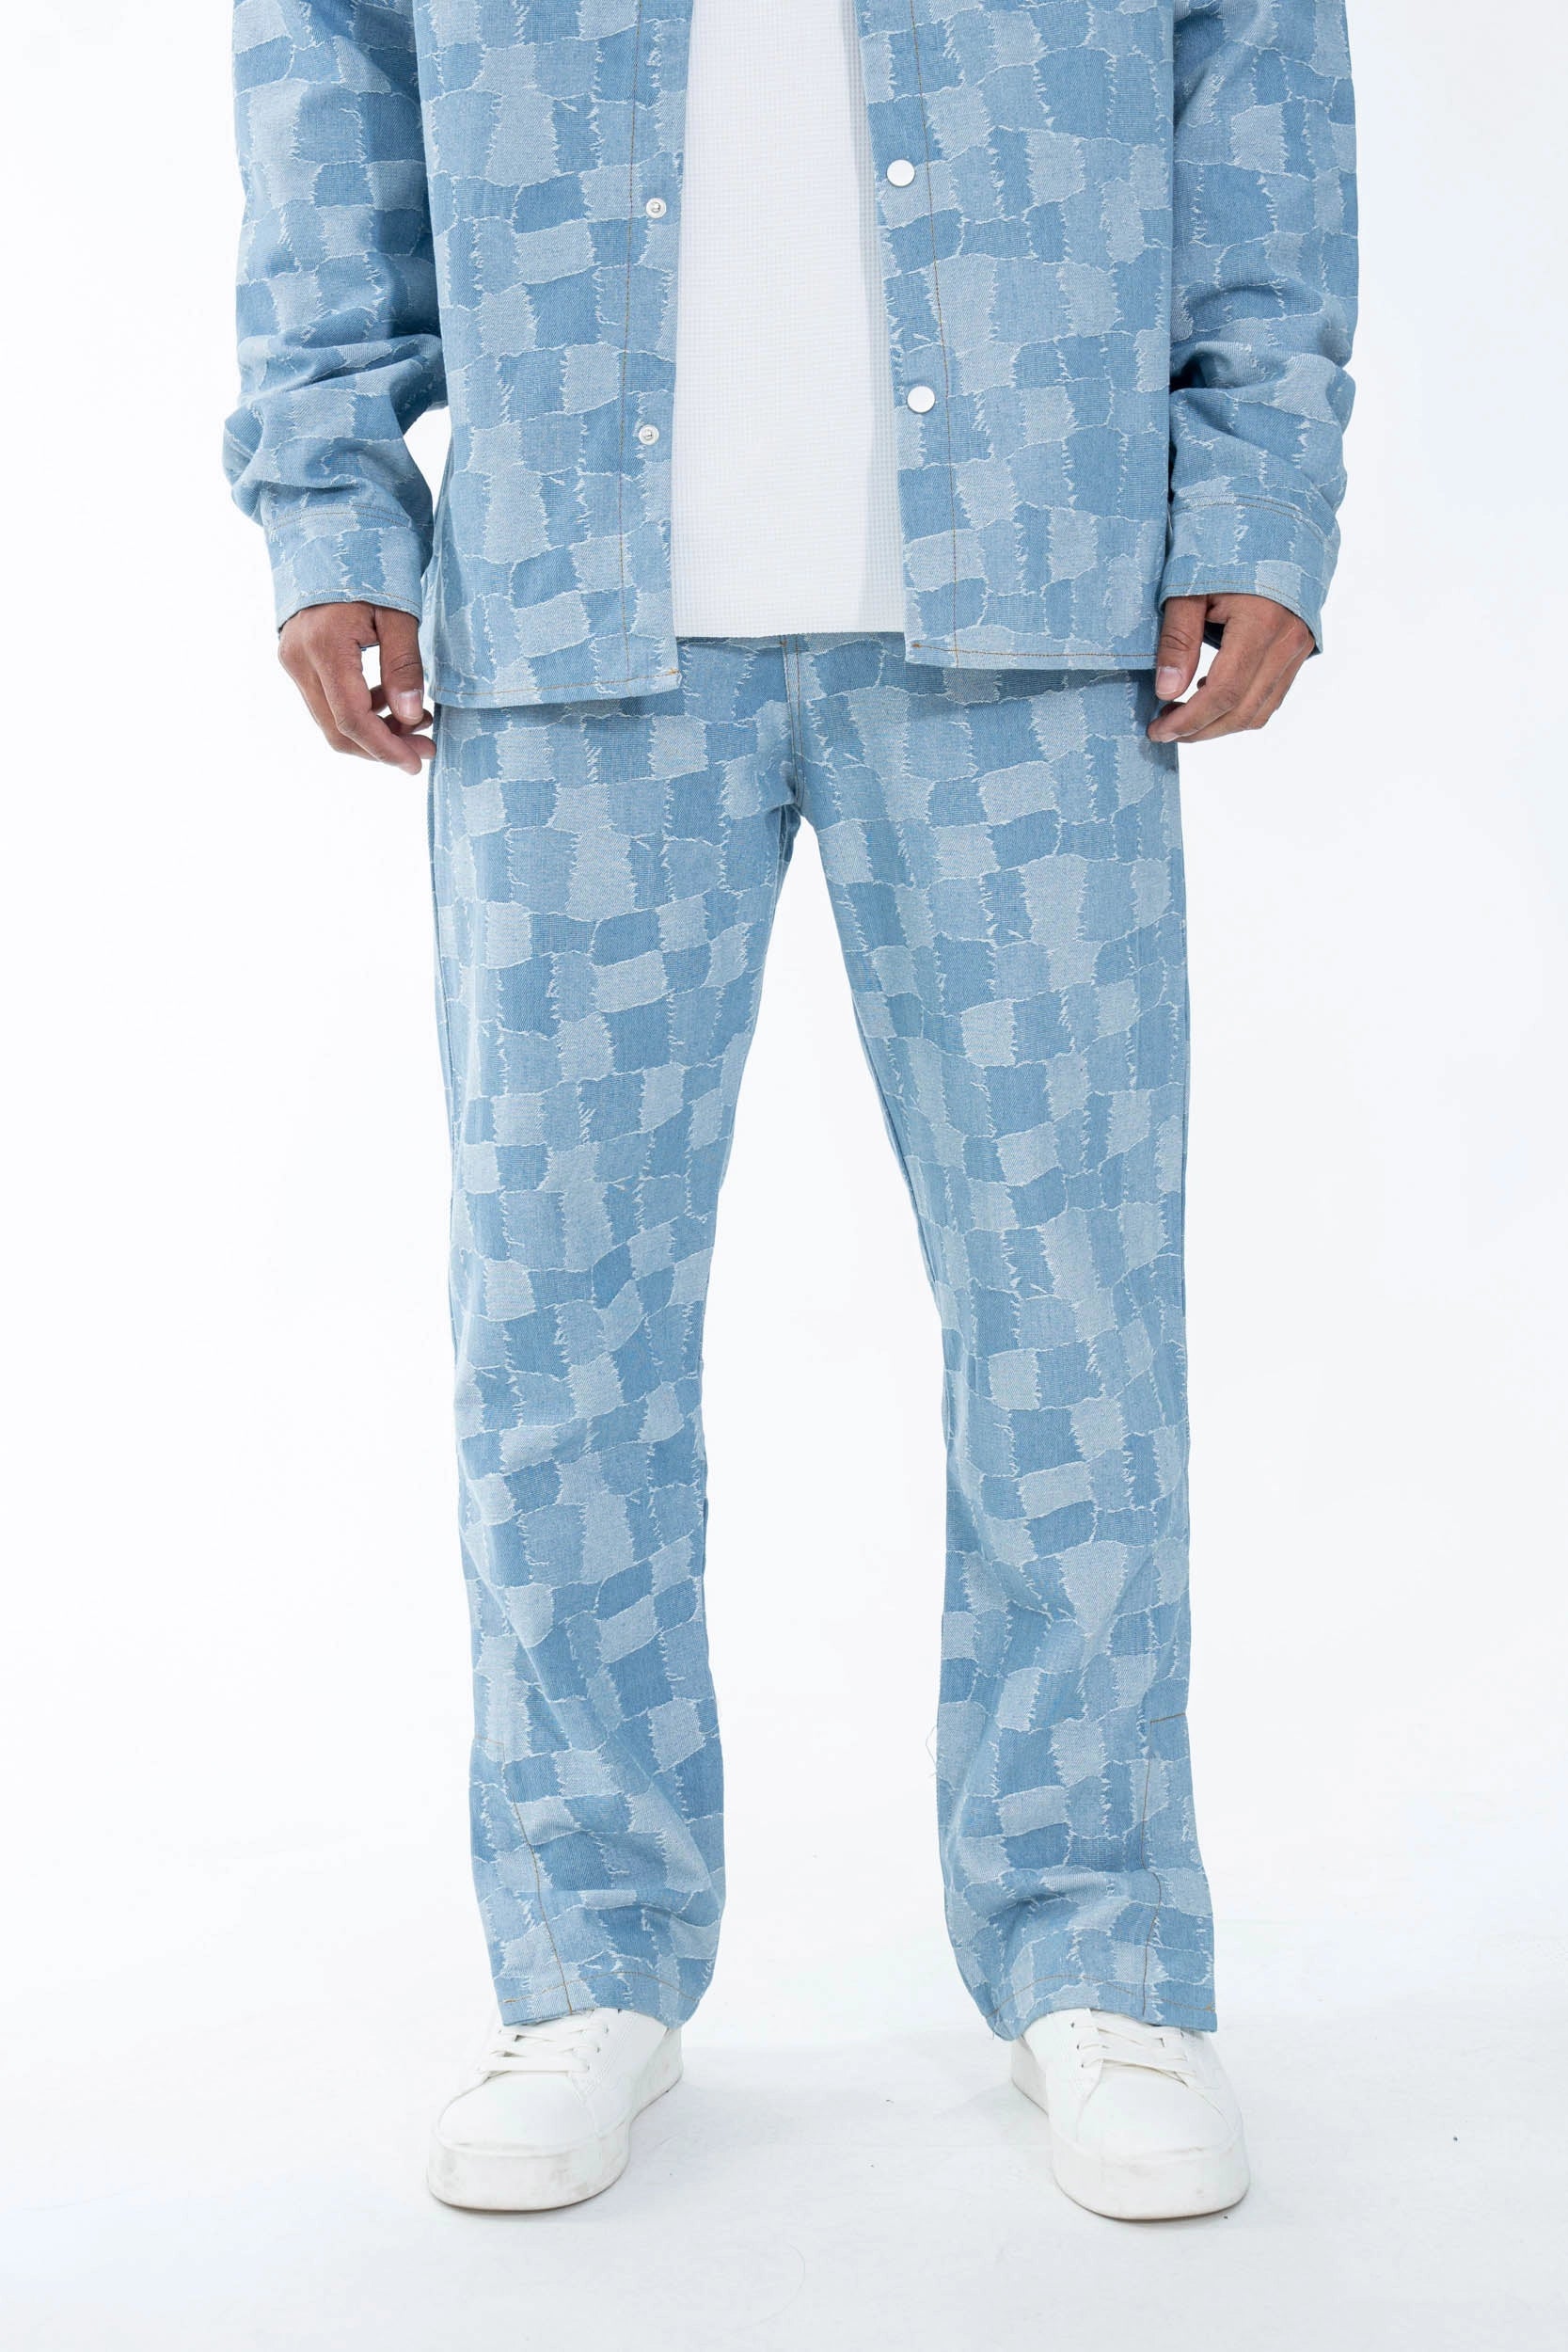 Matching shirt pants set with a square pattern